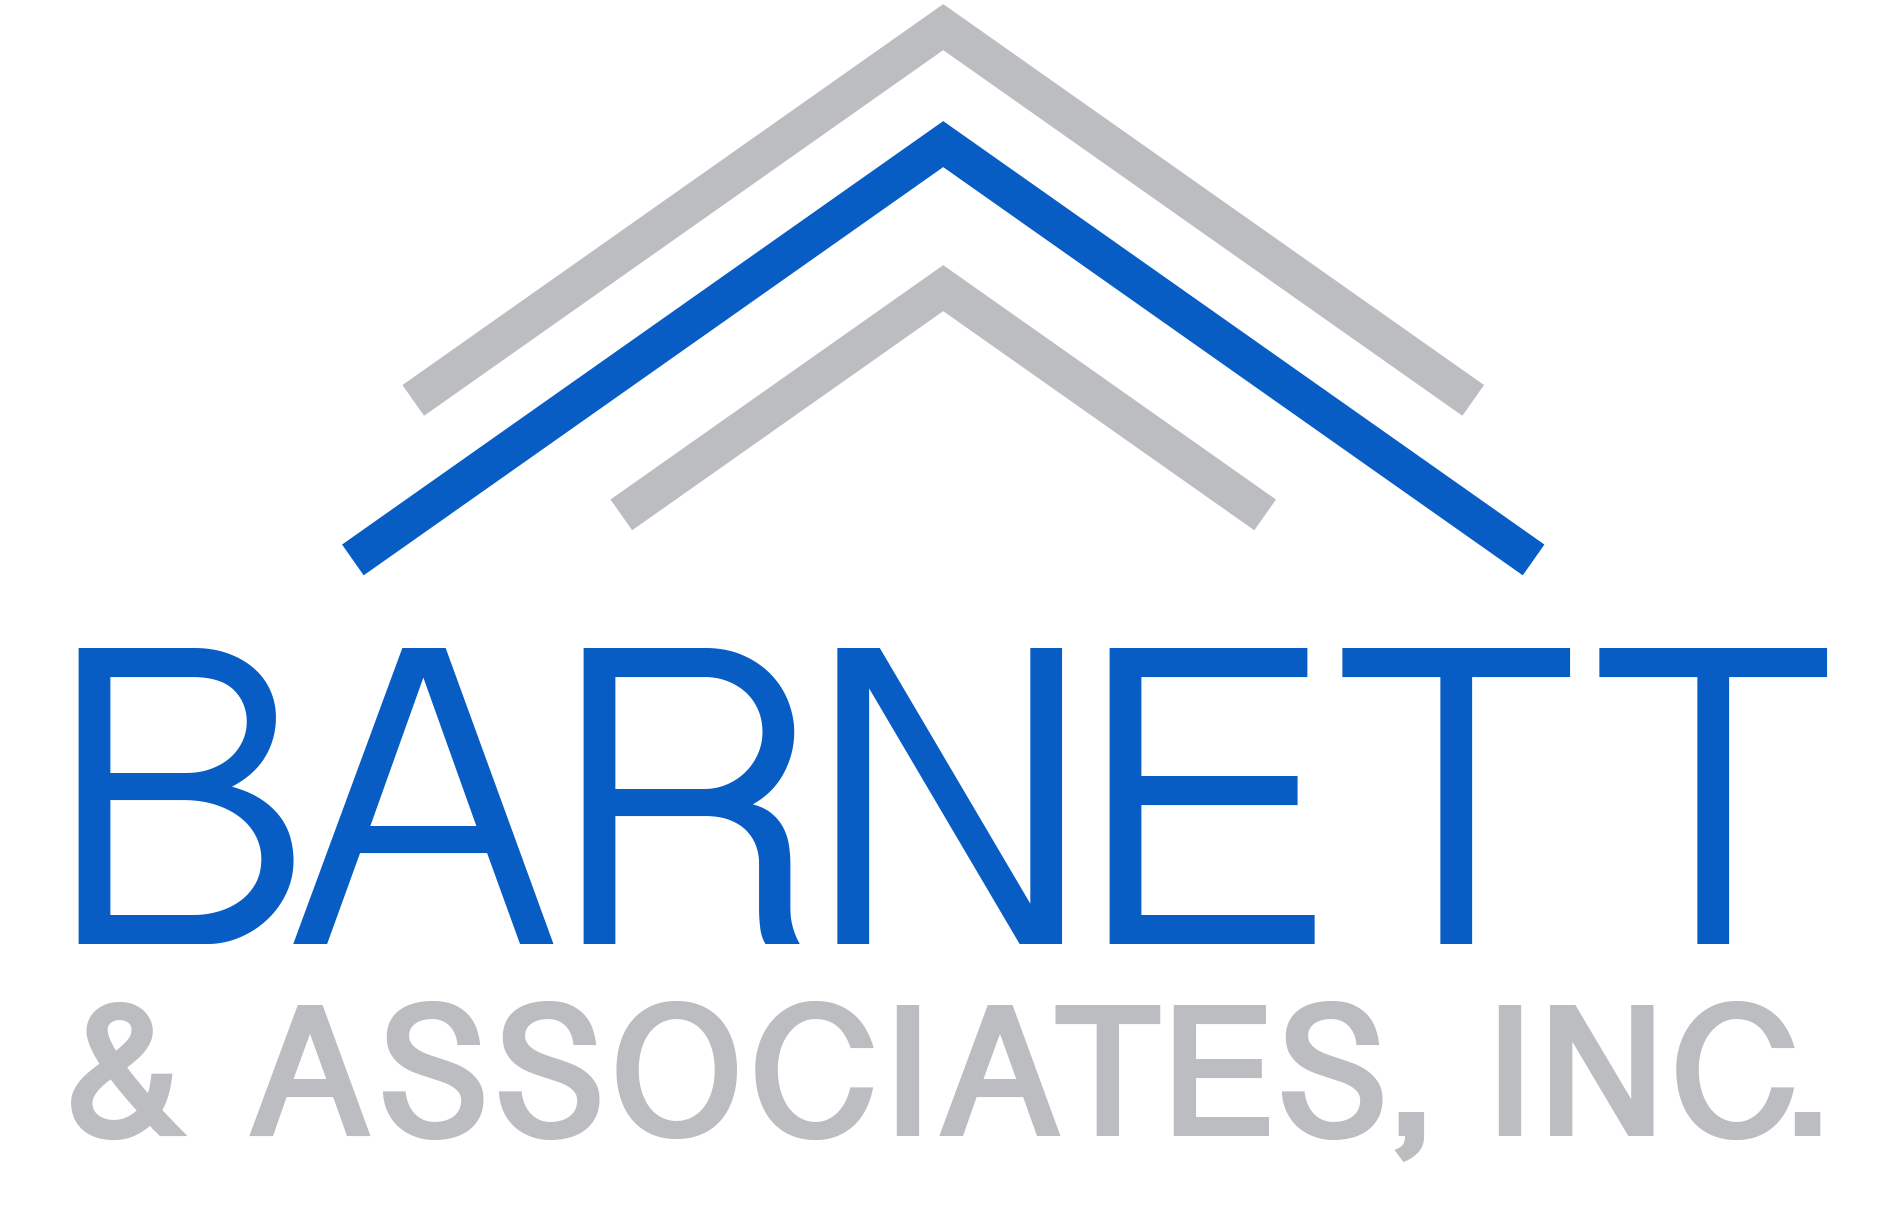 Barnett & Associates, Inc. company logo